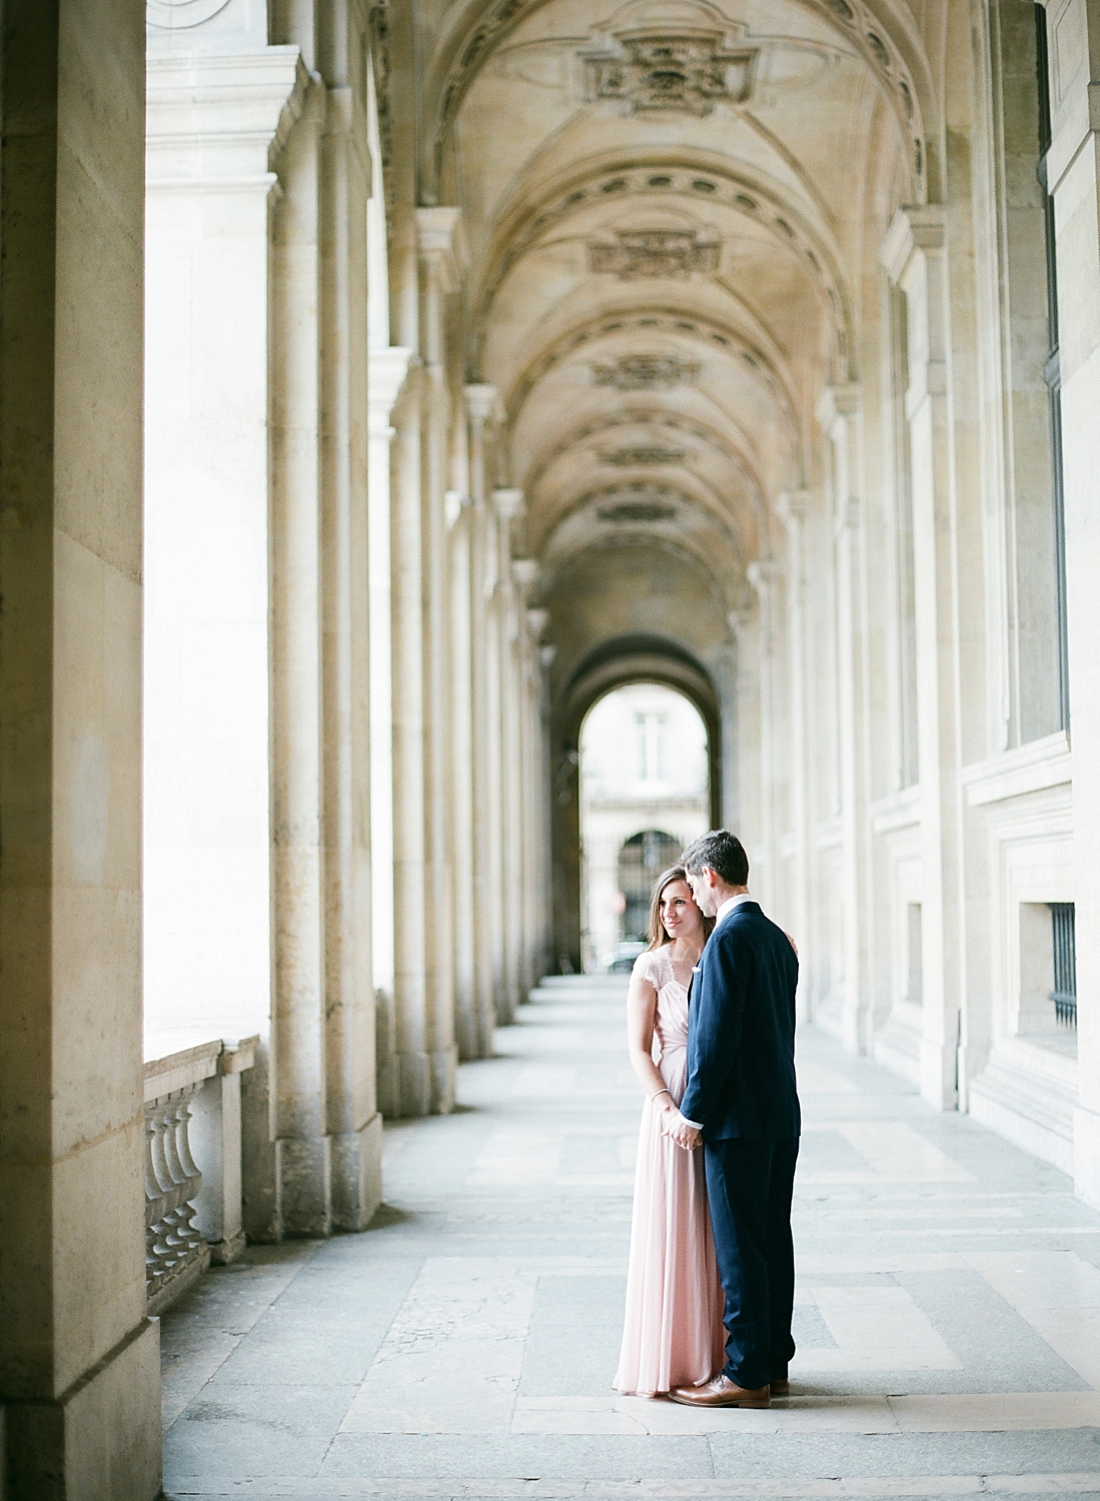 Paris anniversary session at the Musée du Louvre | Abby Grace Photography